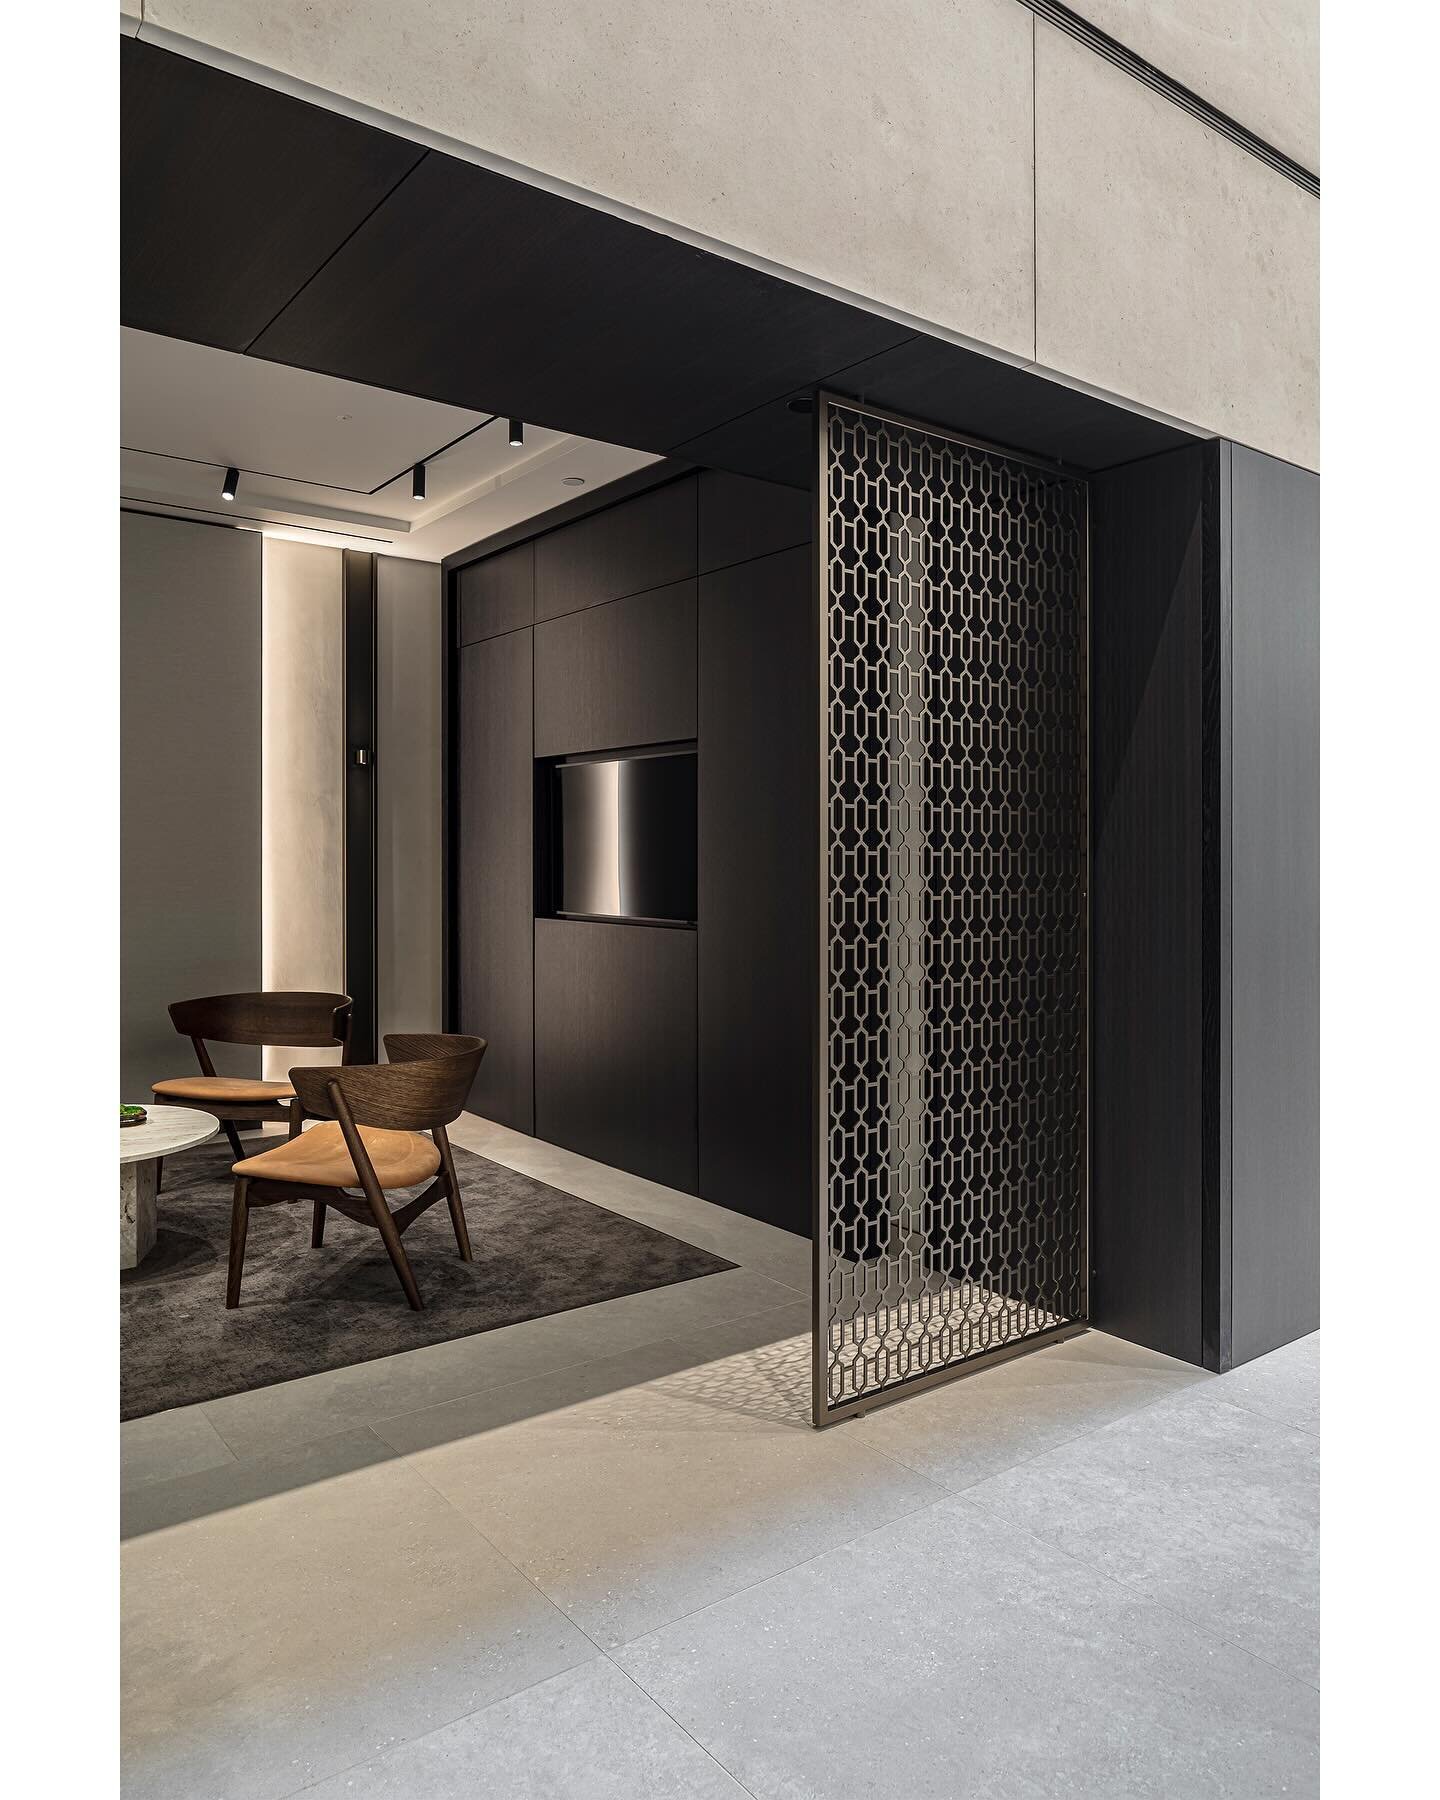 Breakout space

Interior design: @studio_jordan_ 
Architects: @Geoffbrownstudios

#interiordesign #breakoutspace #designandbuild #interiorphotographer #archidaily